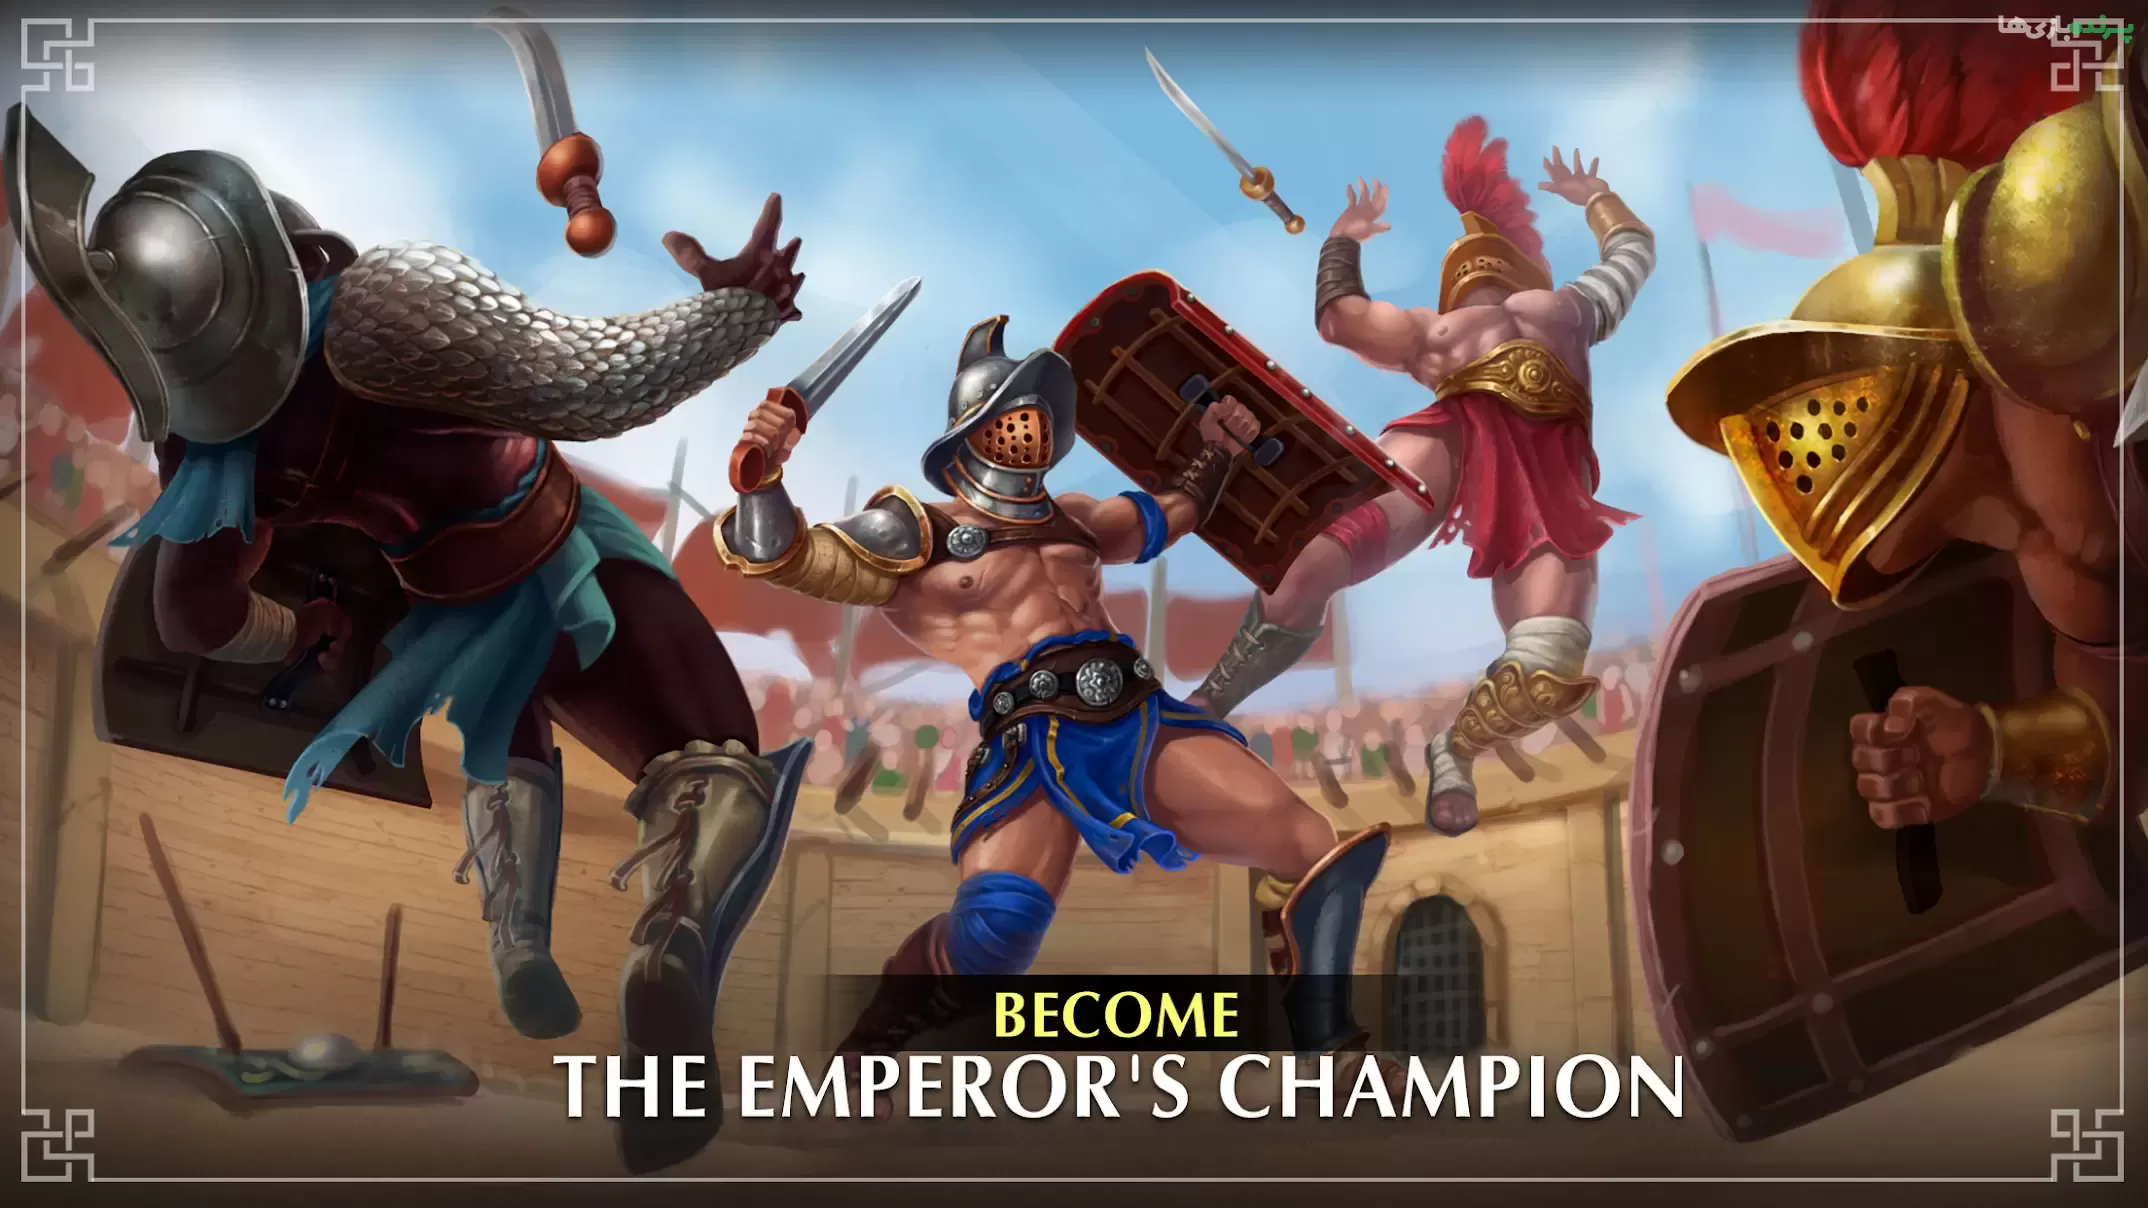 Gladiator Glory Egypt 1.2.0 – بازی اکشن شکوه گلادیاتور مصر اندروید